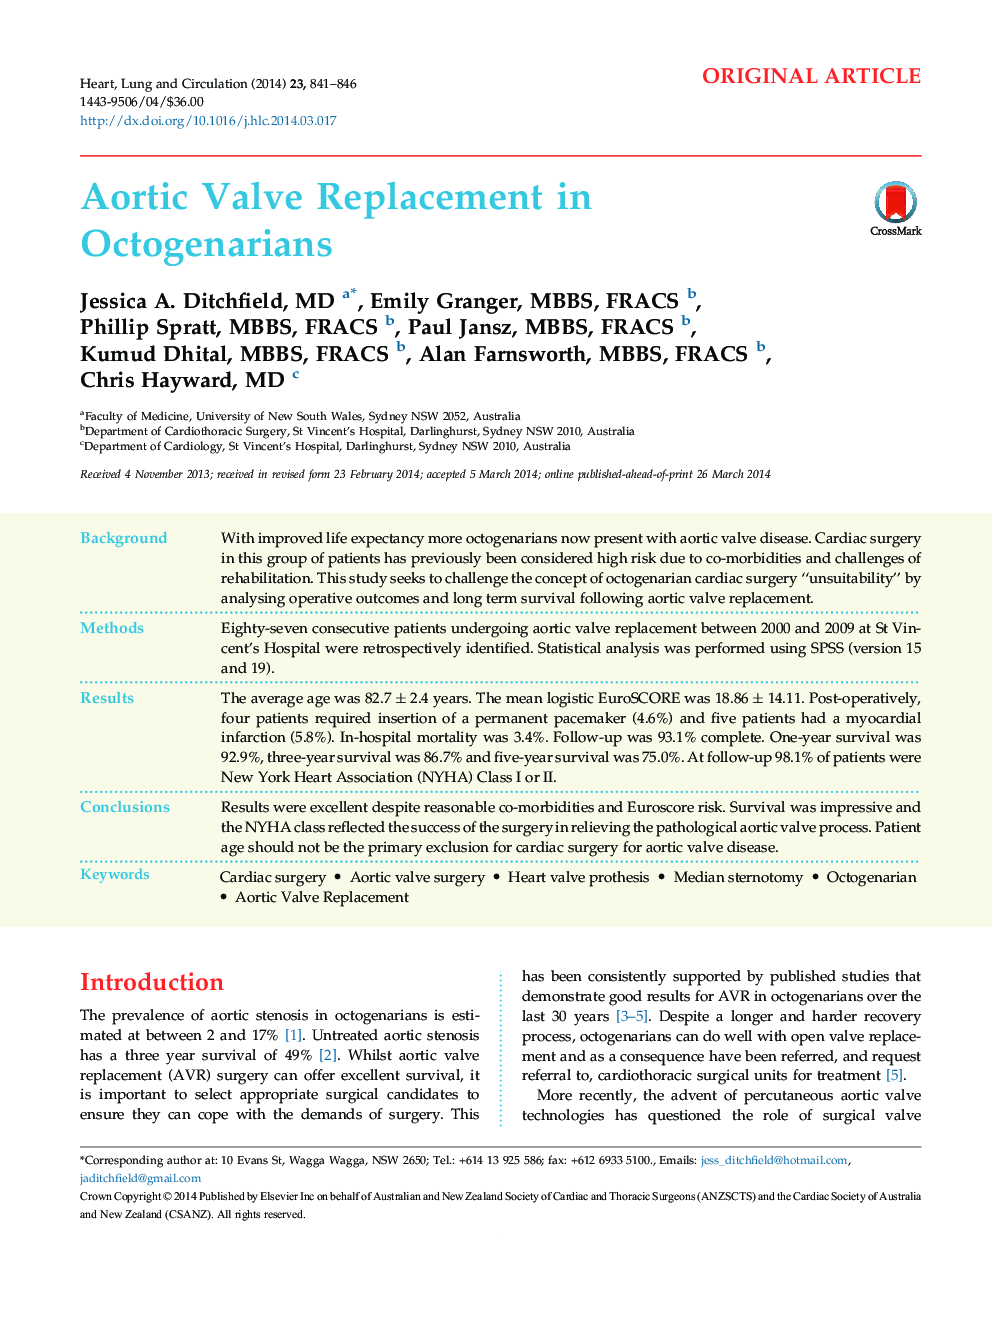 Aortic Valve Replacement in Octogenarians